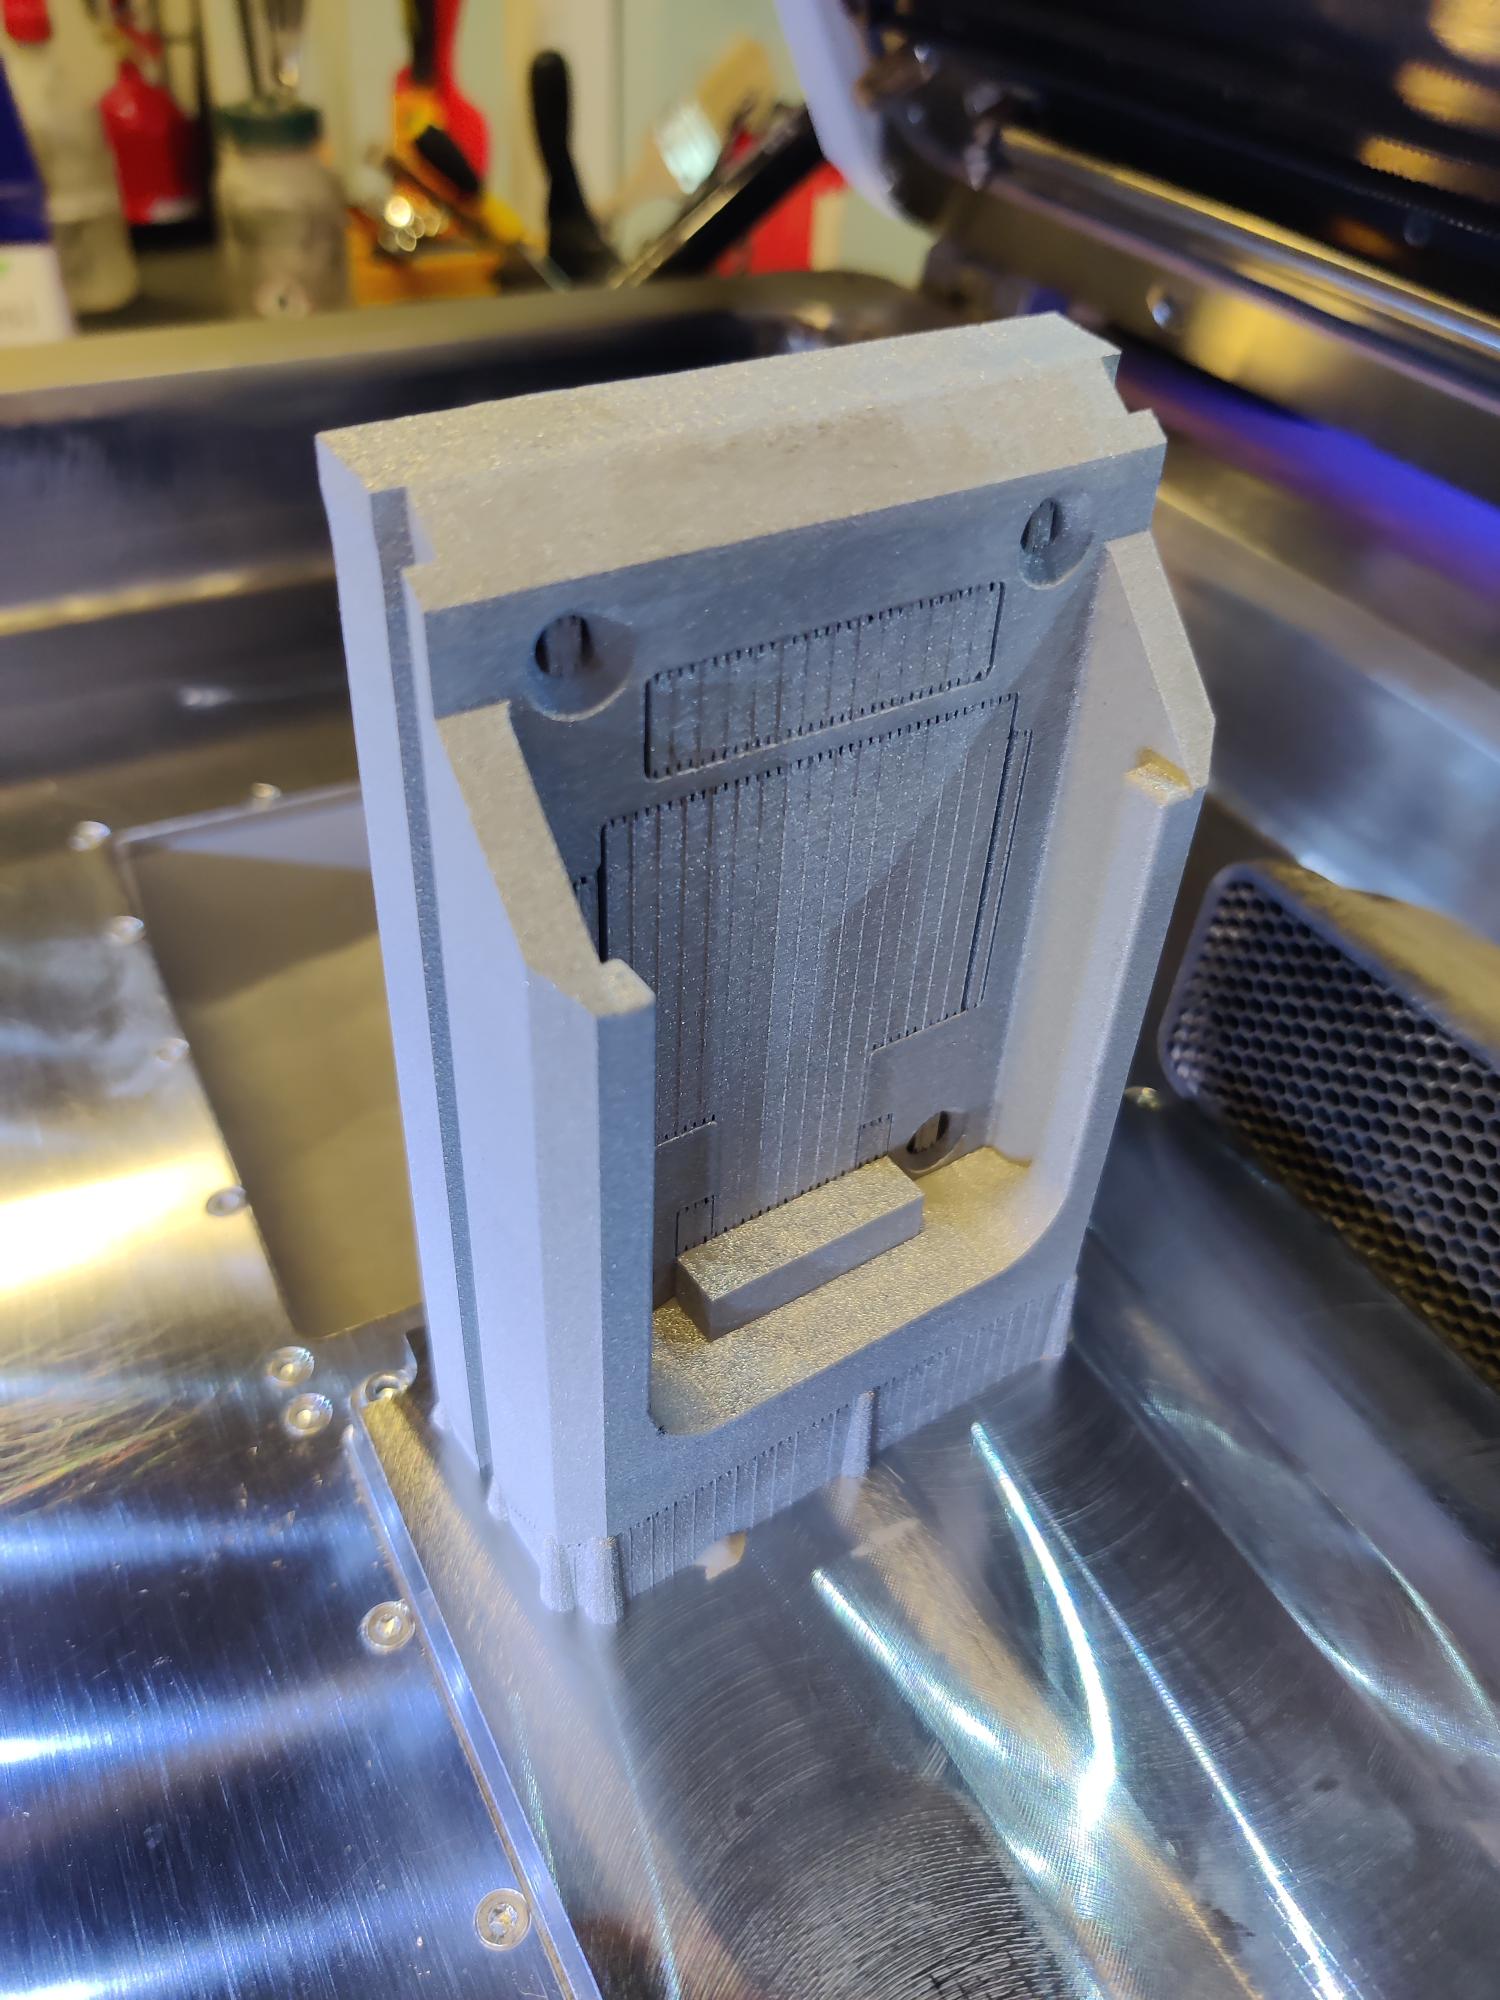 a 3d metal printed part printed by Xact Metal printer at SDU in Denmark.